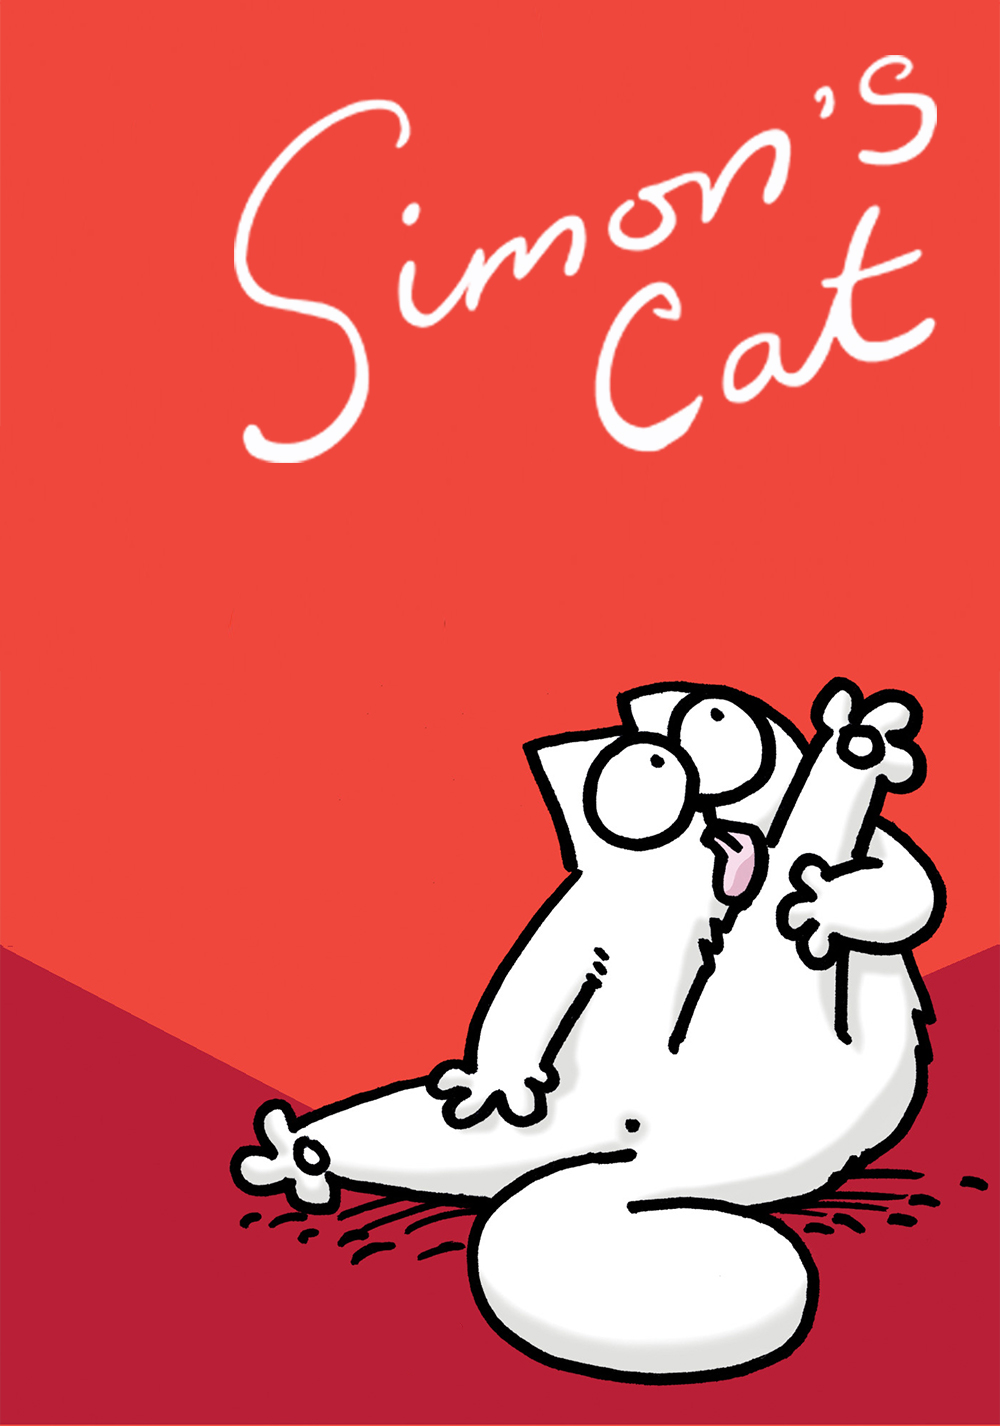 Simon's Cat - Wikipedia